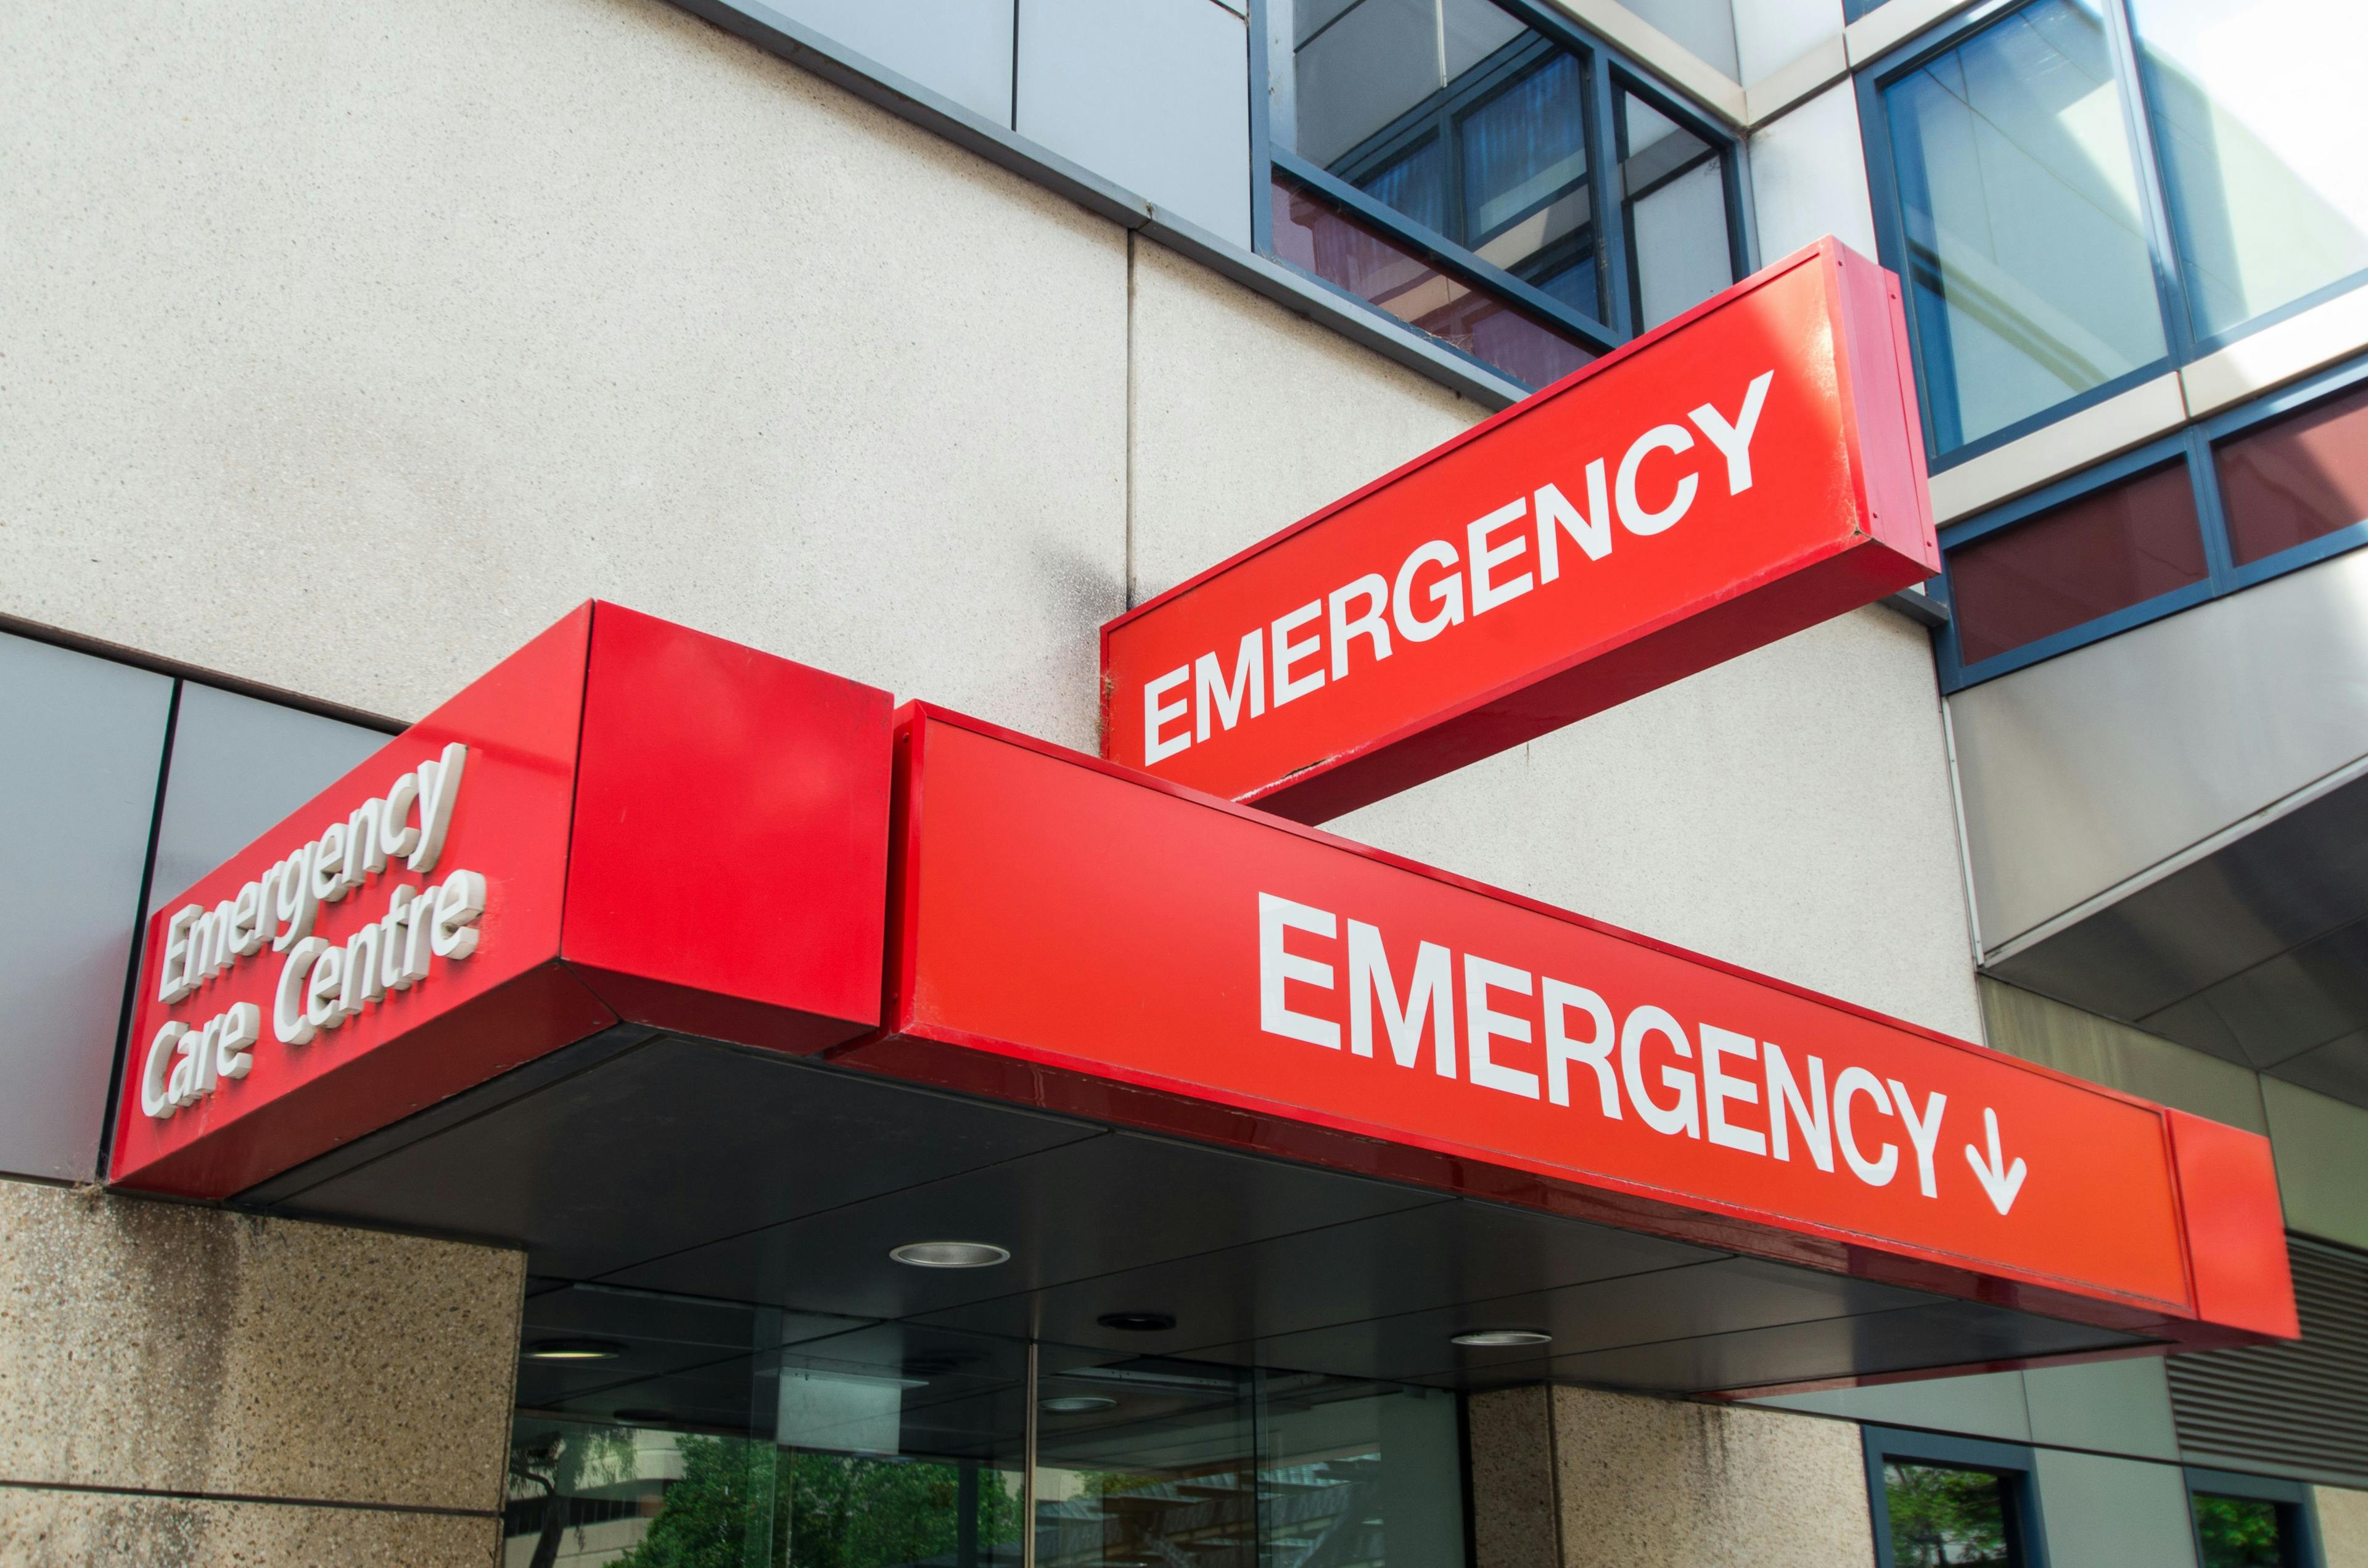 Emergency room entrance -- Image credit: nilsversemann | stock.adobe.com